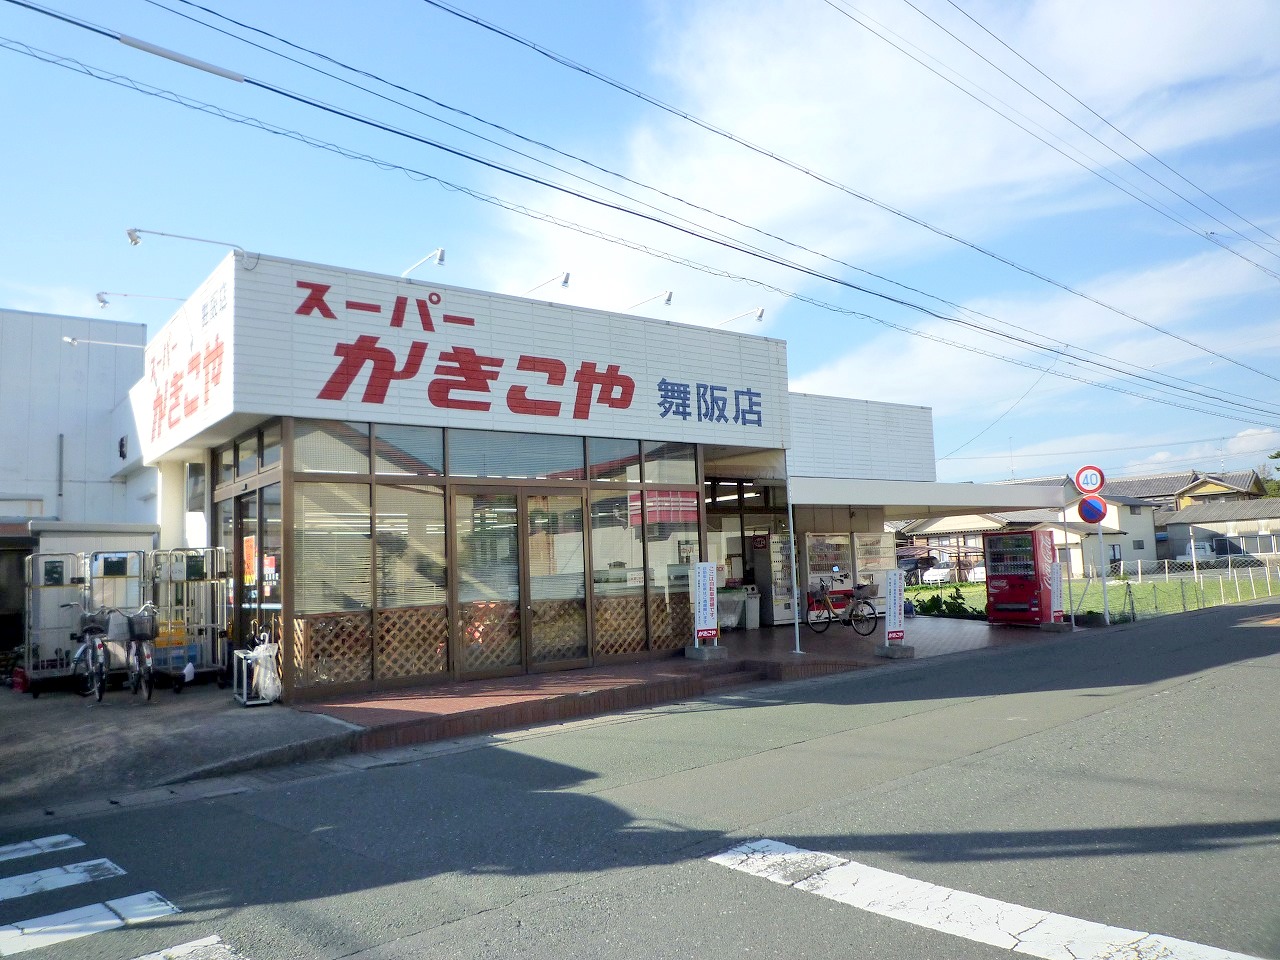 Supermarket. Kakiko and Maisaka store up to (super) 234m